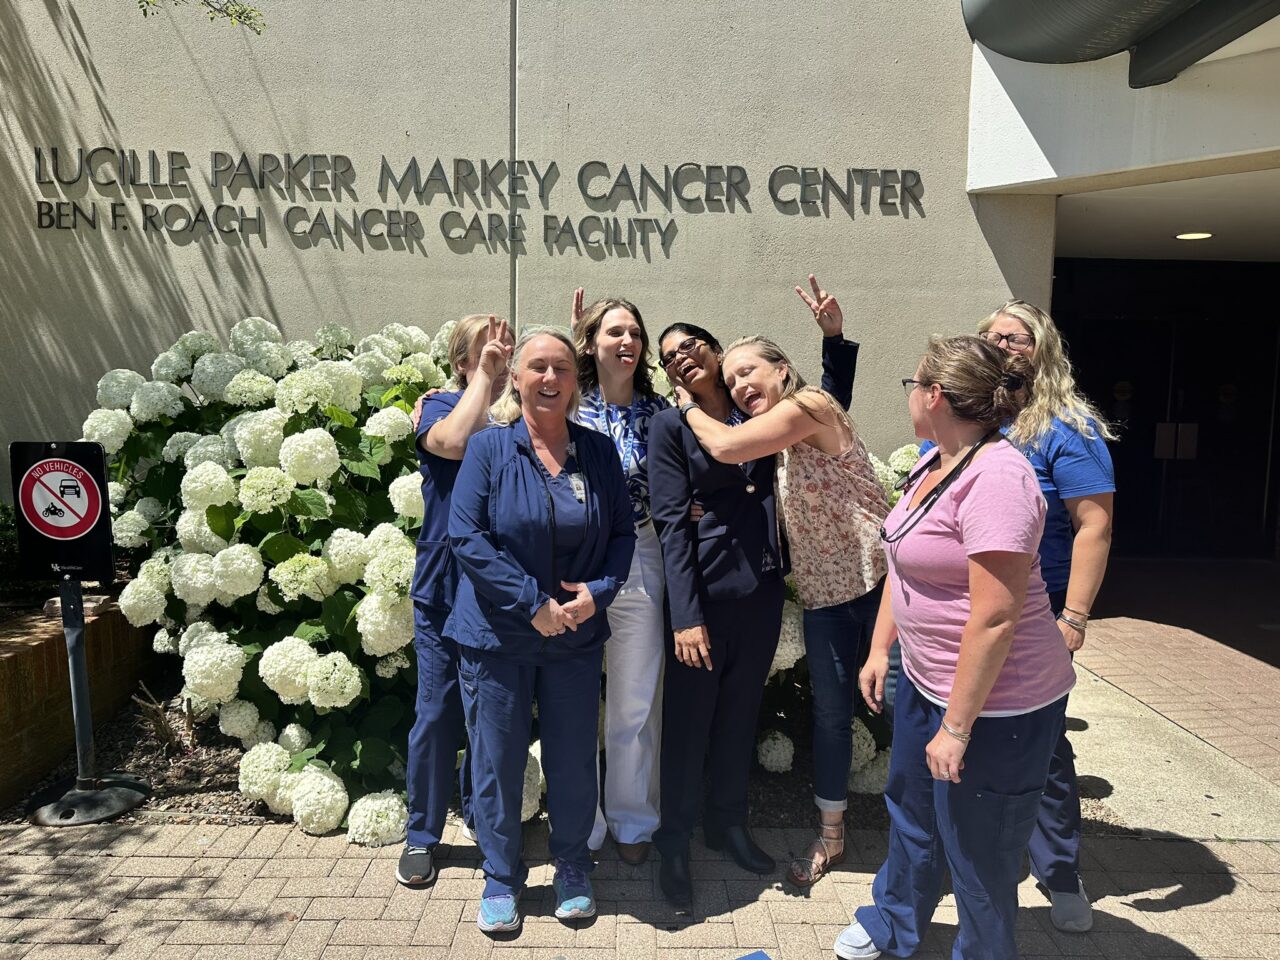 Reshma Ramlal: Last clinic day at Markey Cancer Center